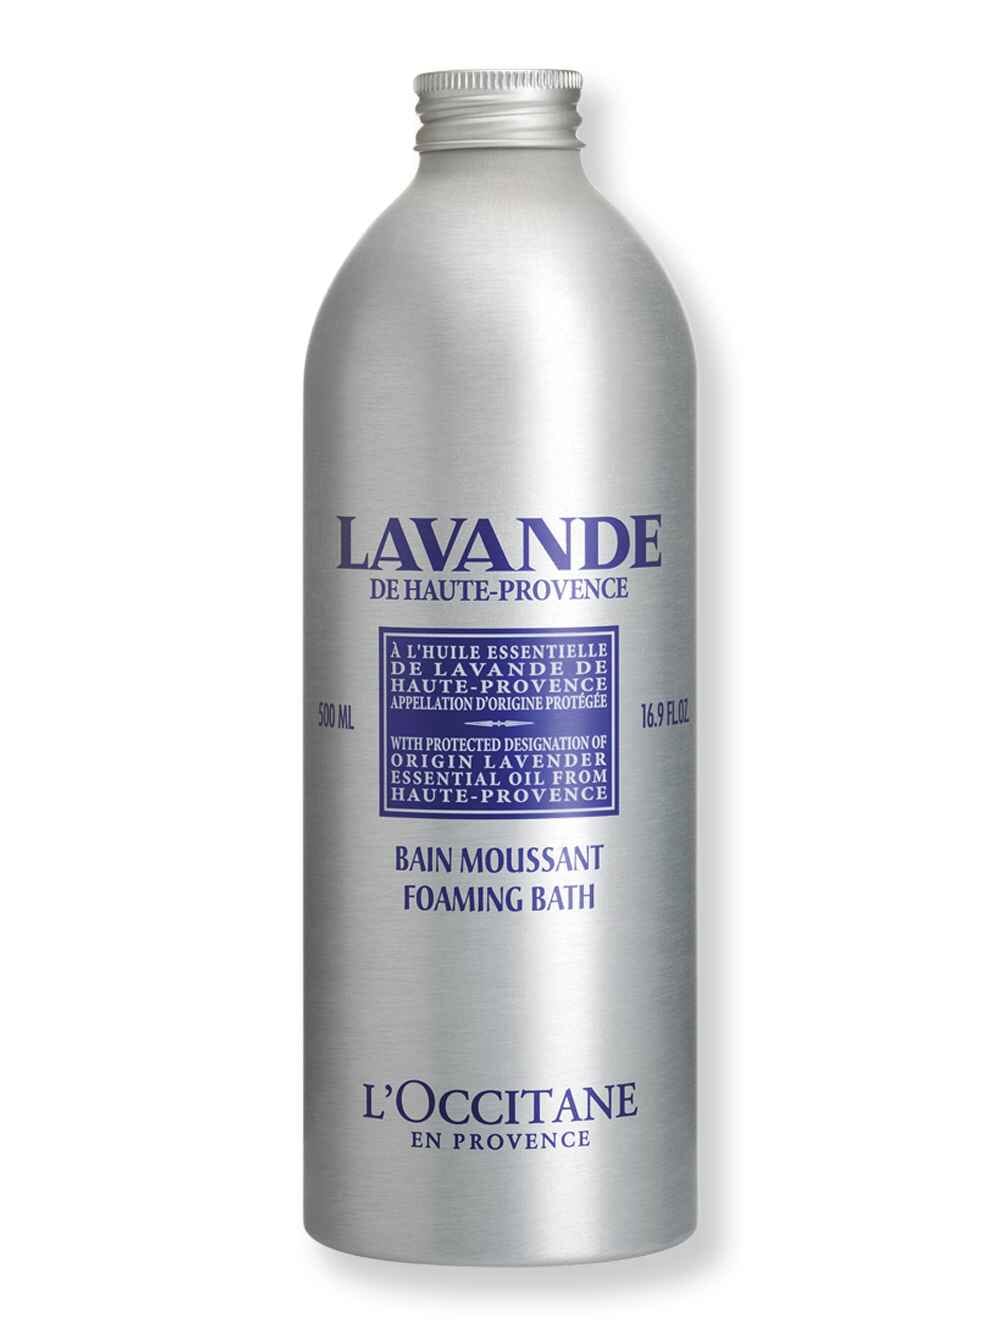 L'Occitane L'Occitane Lavender Foaming Bath 16.9 fl oz Body Treatments 